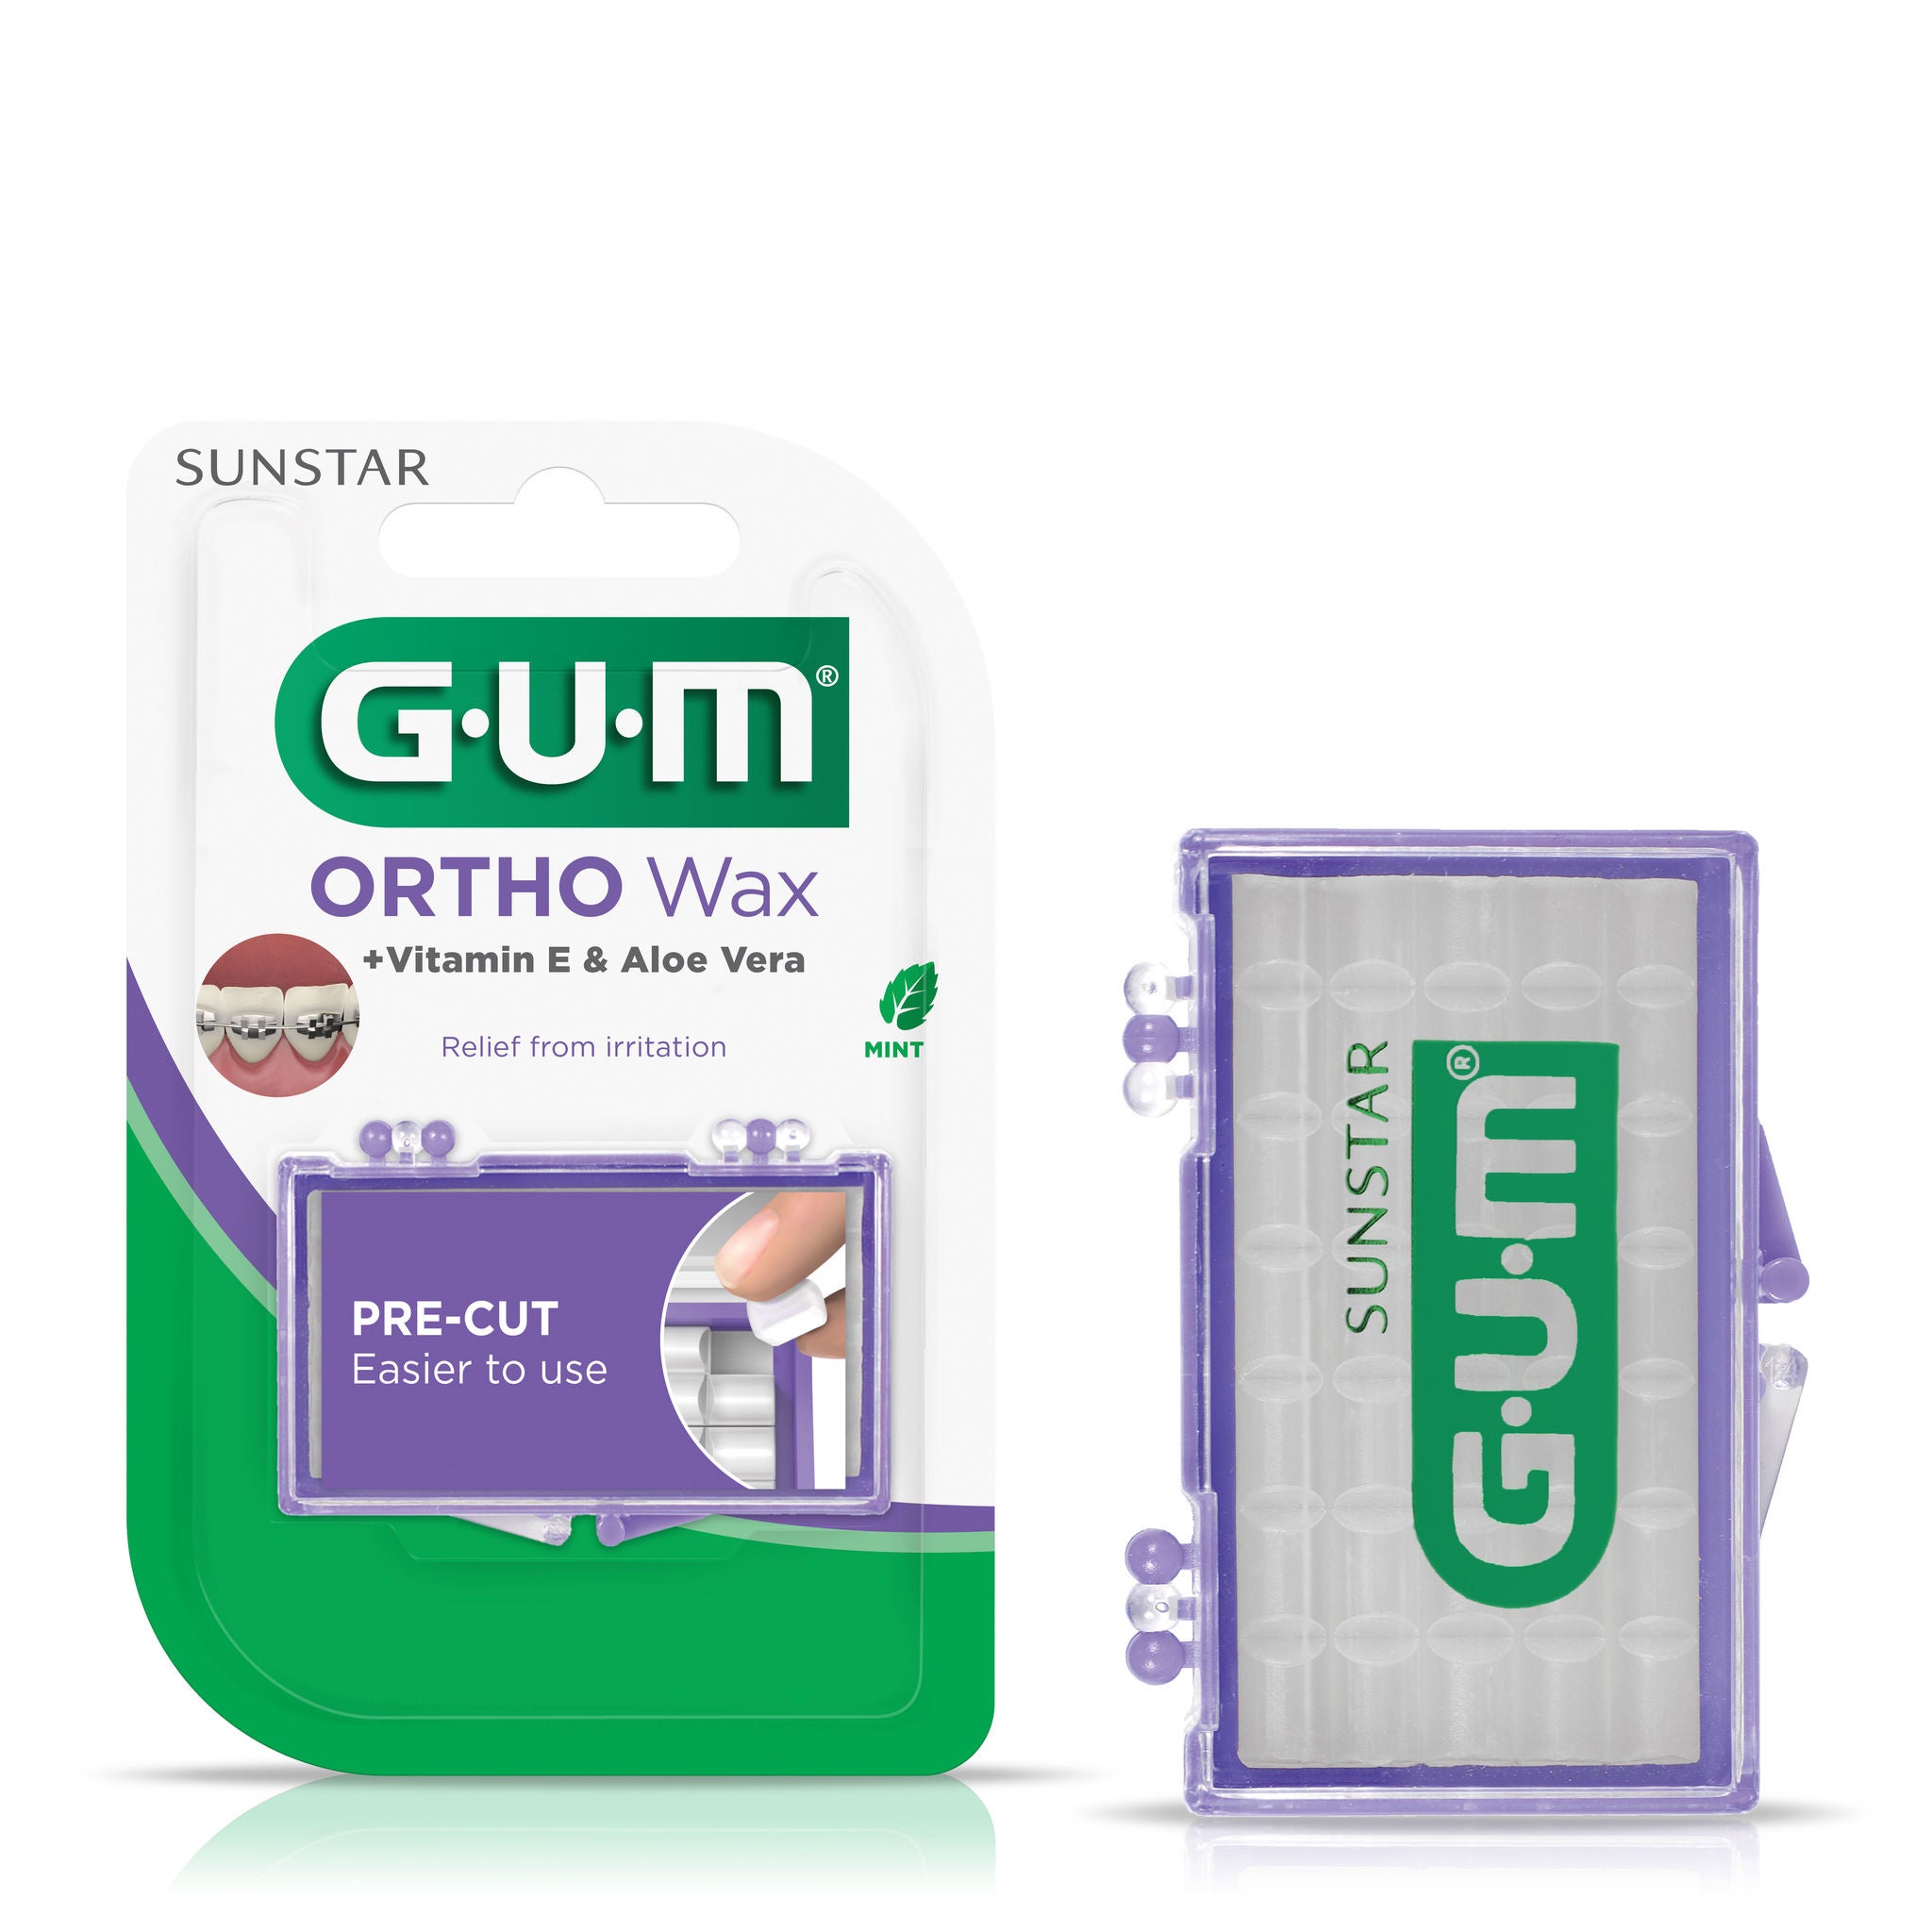 724RQE-Product-Packaging-Accessories-Orthodontic-Wax-Mint-1ct-Hero-CleanedUp.US.jpg